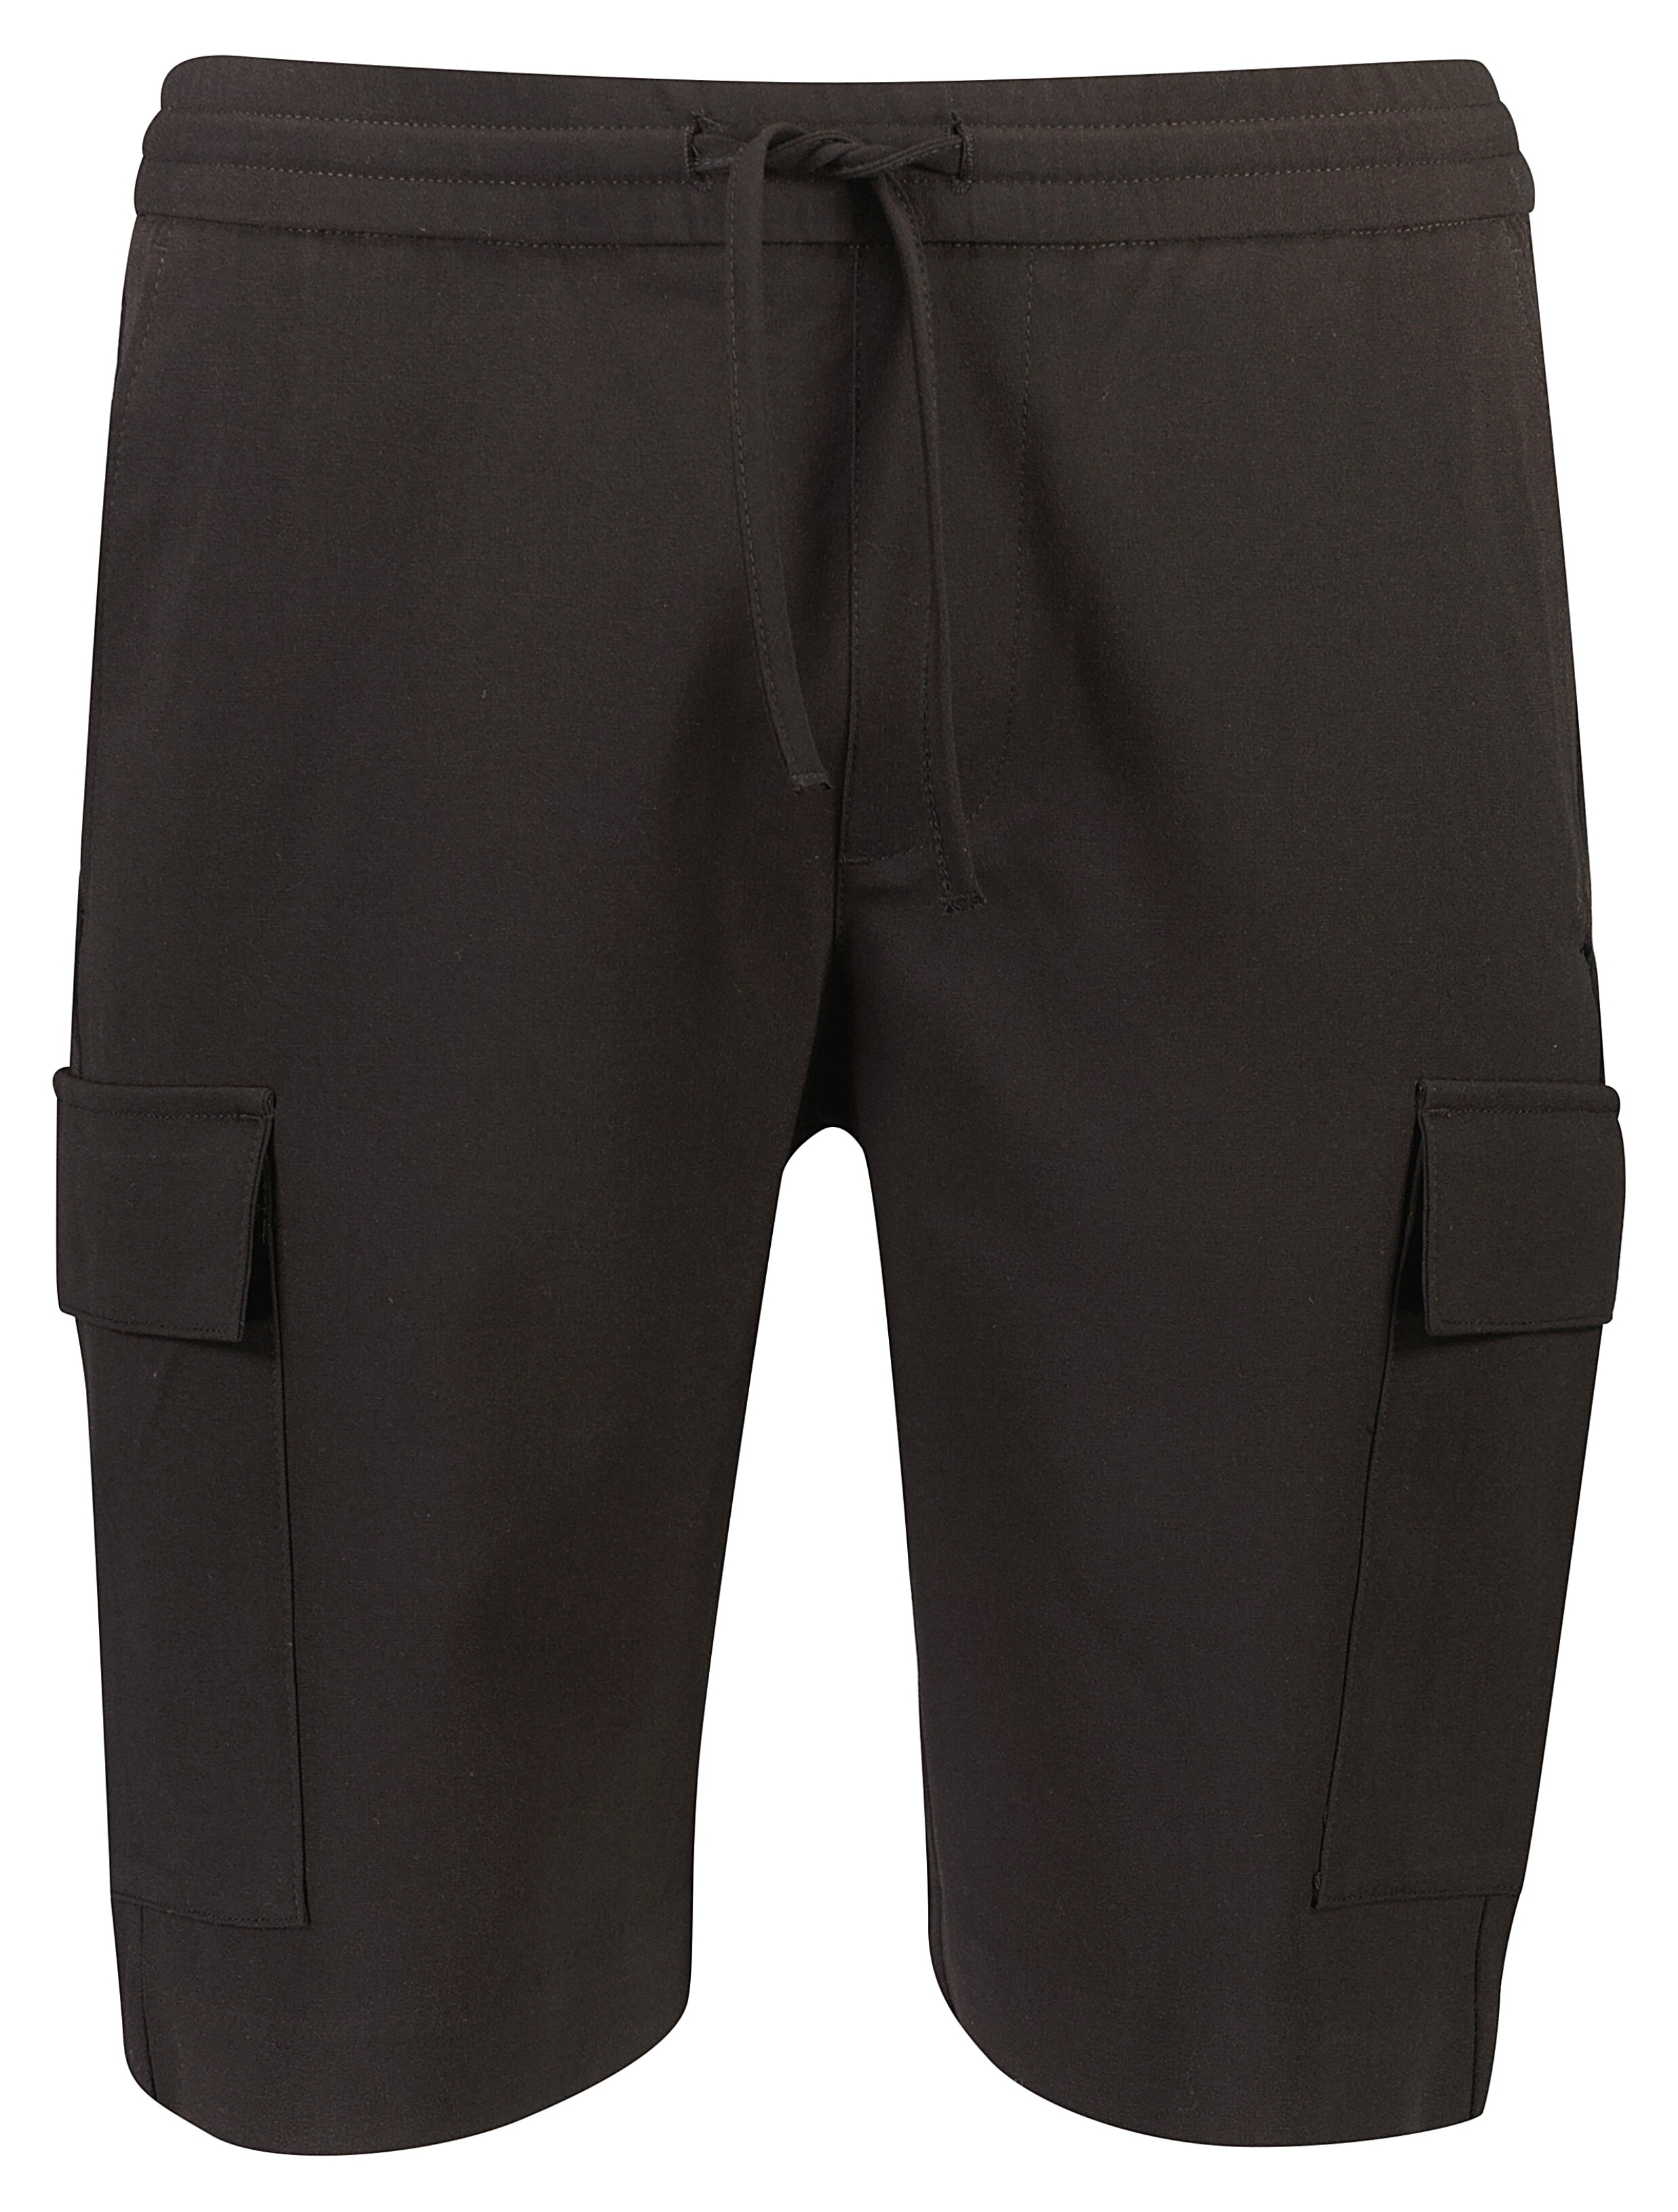 Lindbergh Casual shorts sort / black